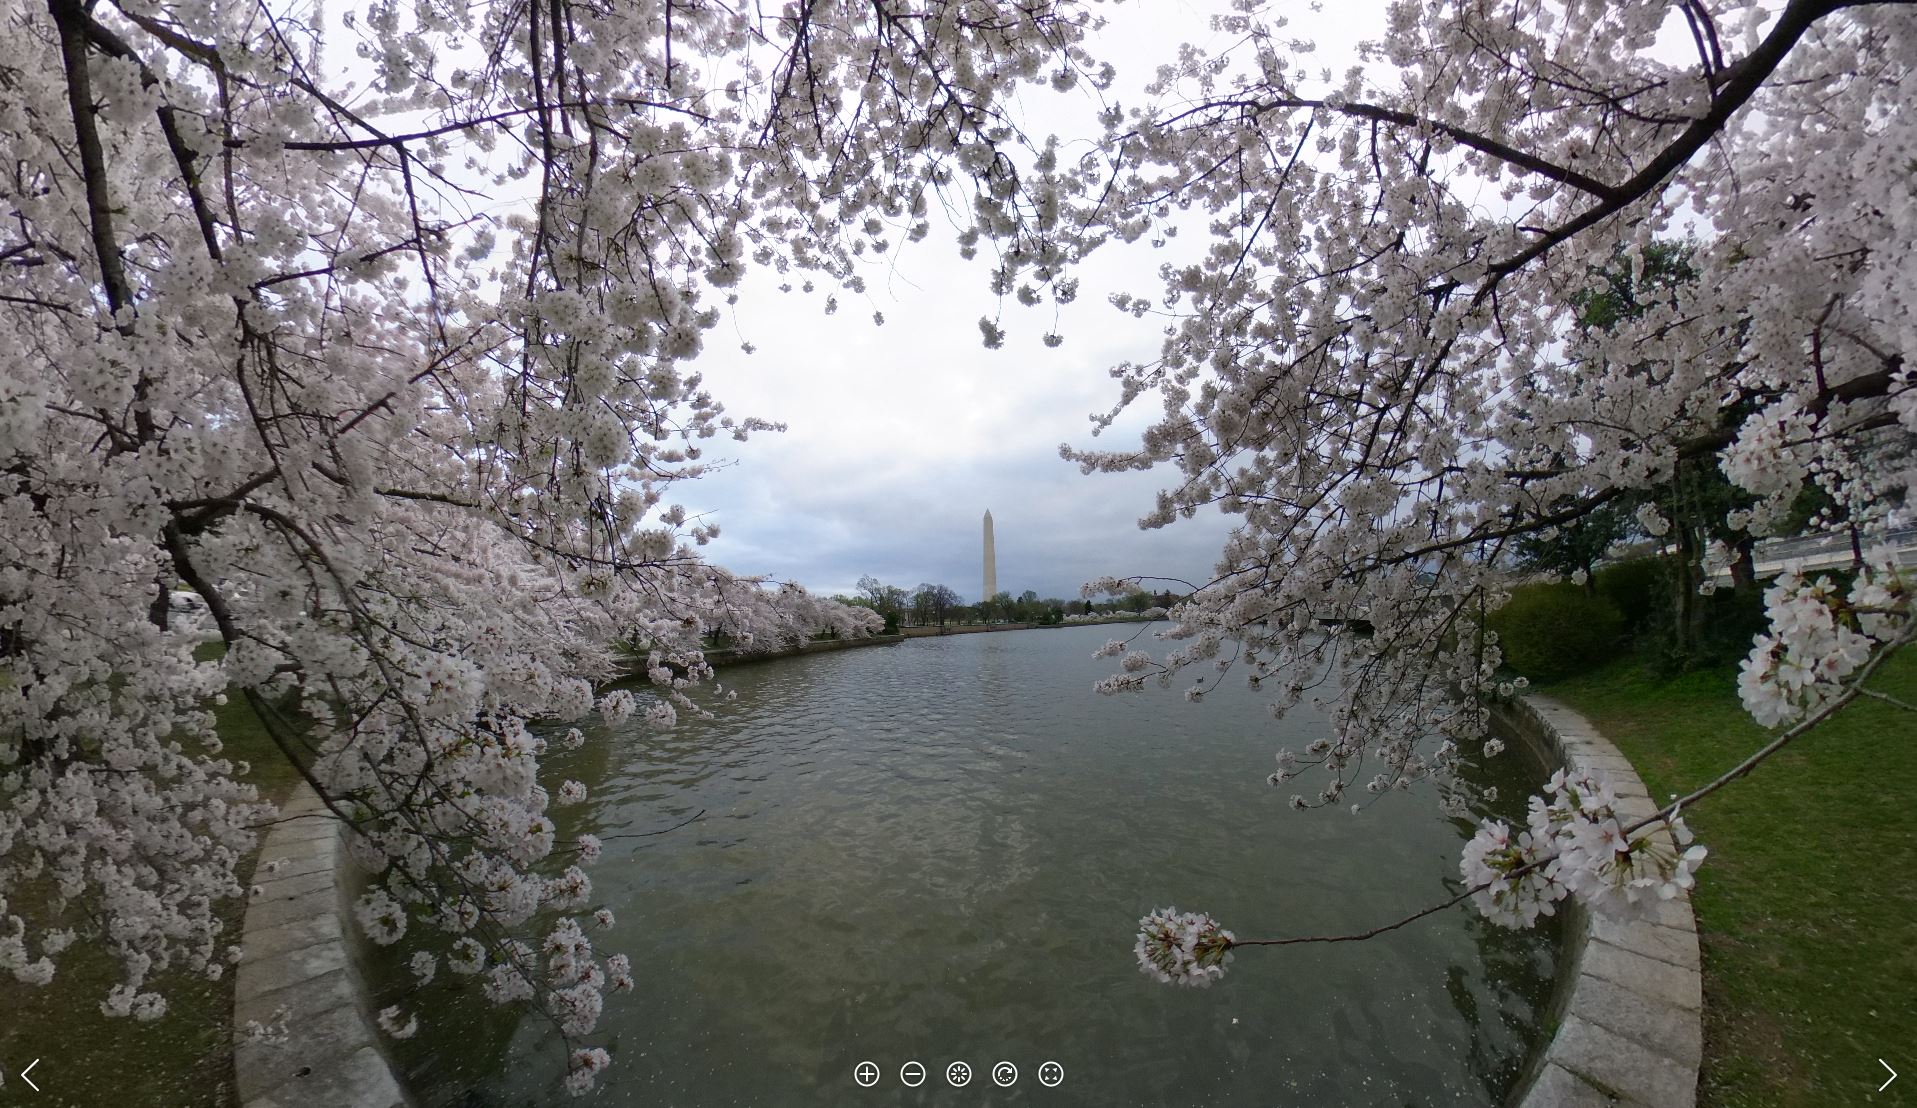 How to Best Enjoy the Washington DC Cherry Blossom Festival